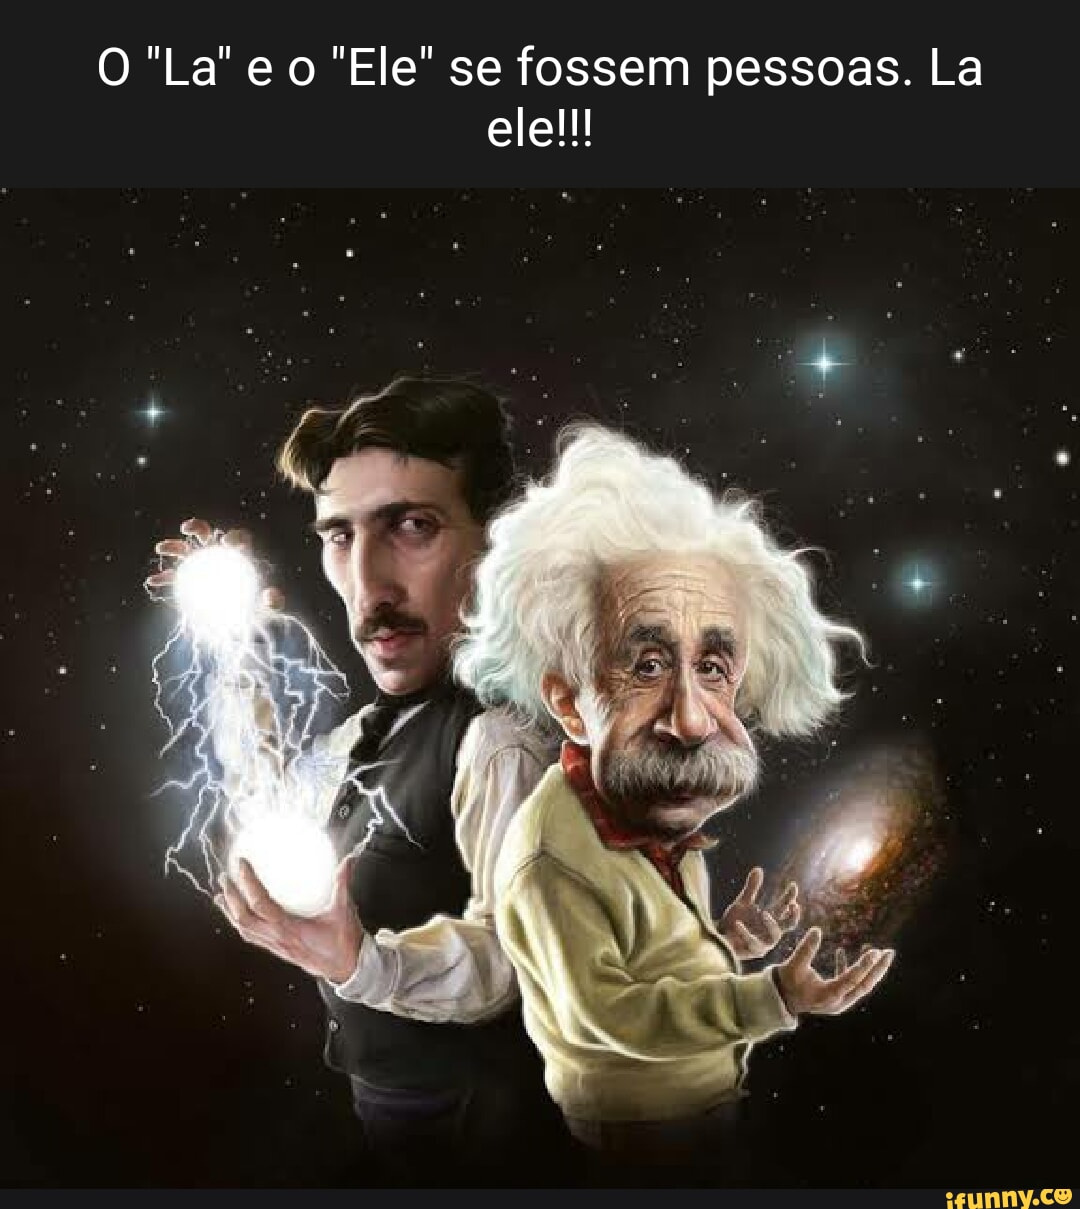 A pro albert Einstein Nikola meu filho: Precente Tesla Pedro Loos  Oppenheimer Eu Sabo Da Silva - iFunny Brazil